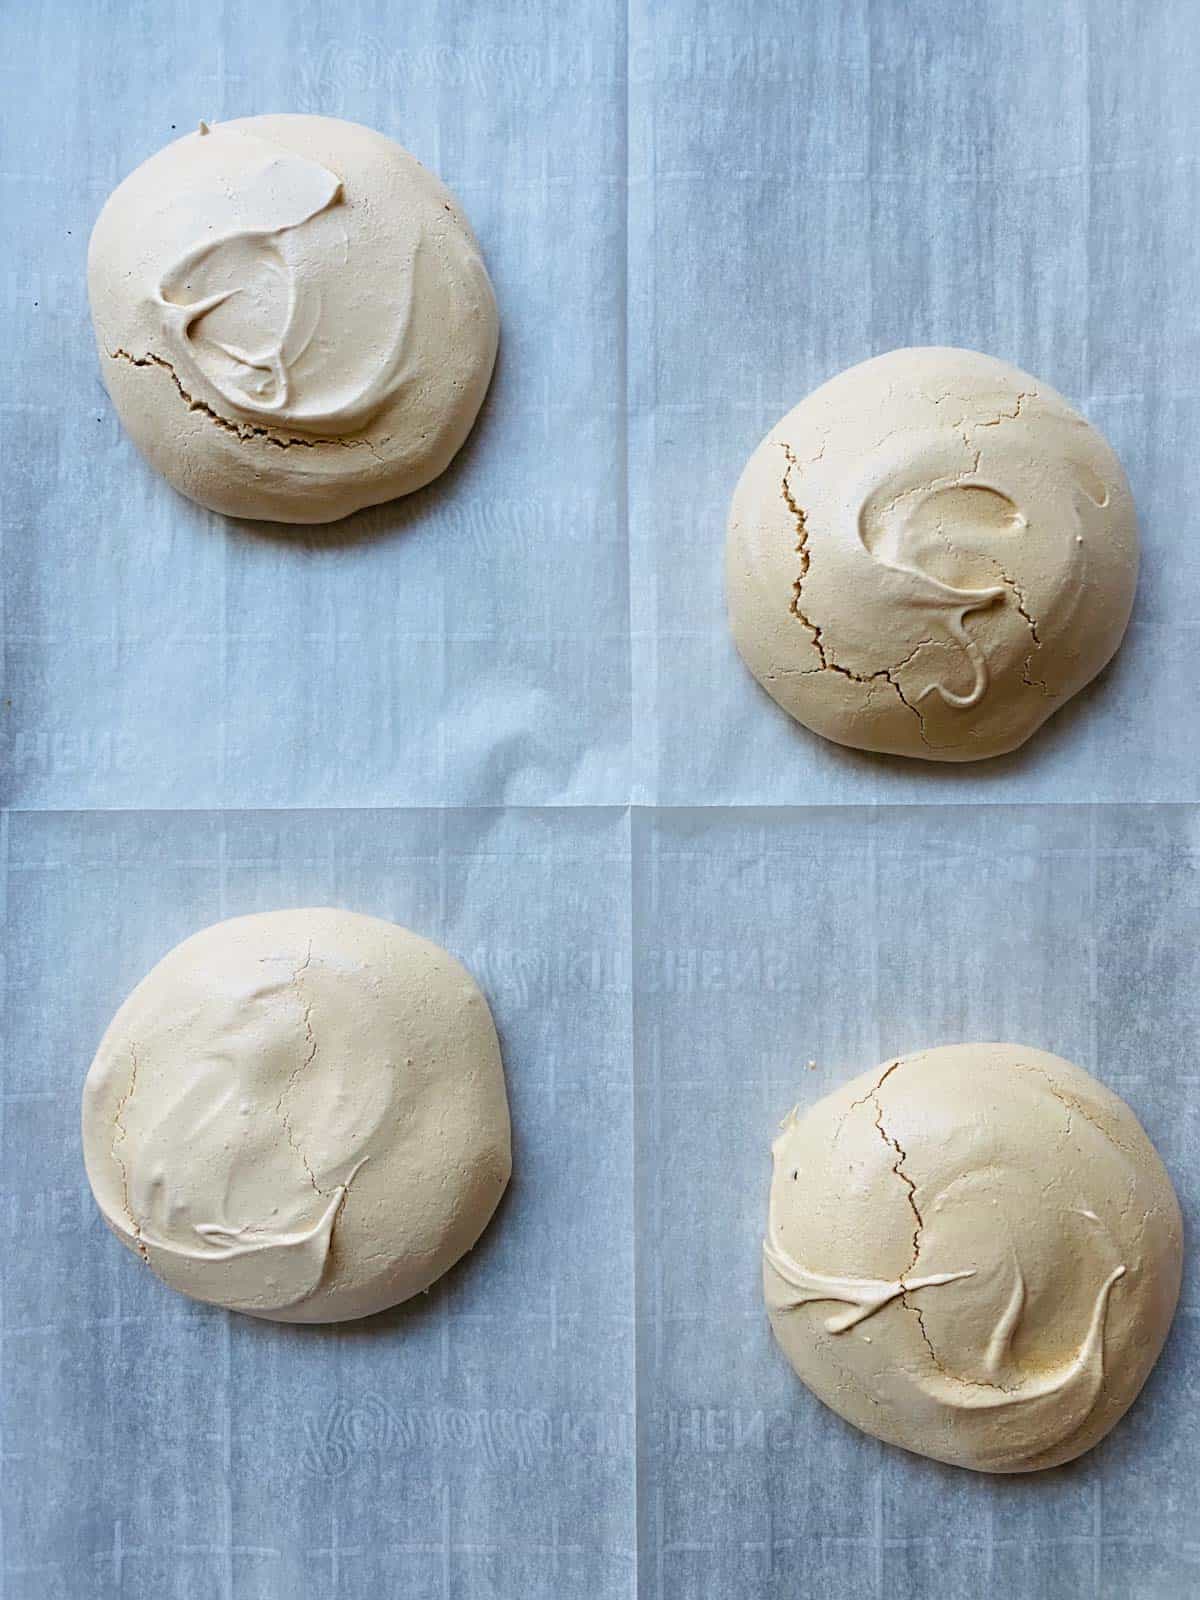 Baked meringues on baking sheet